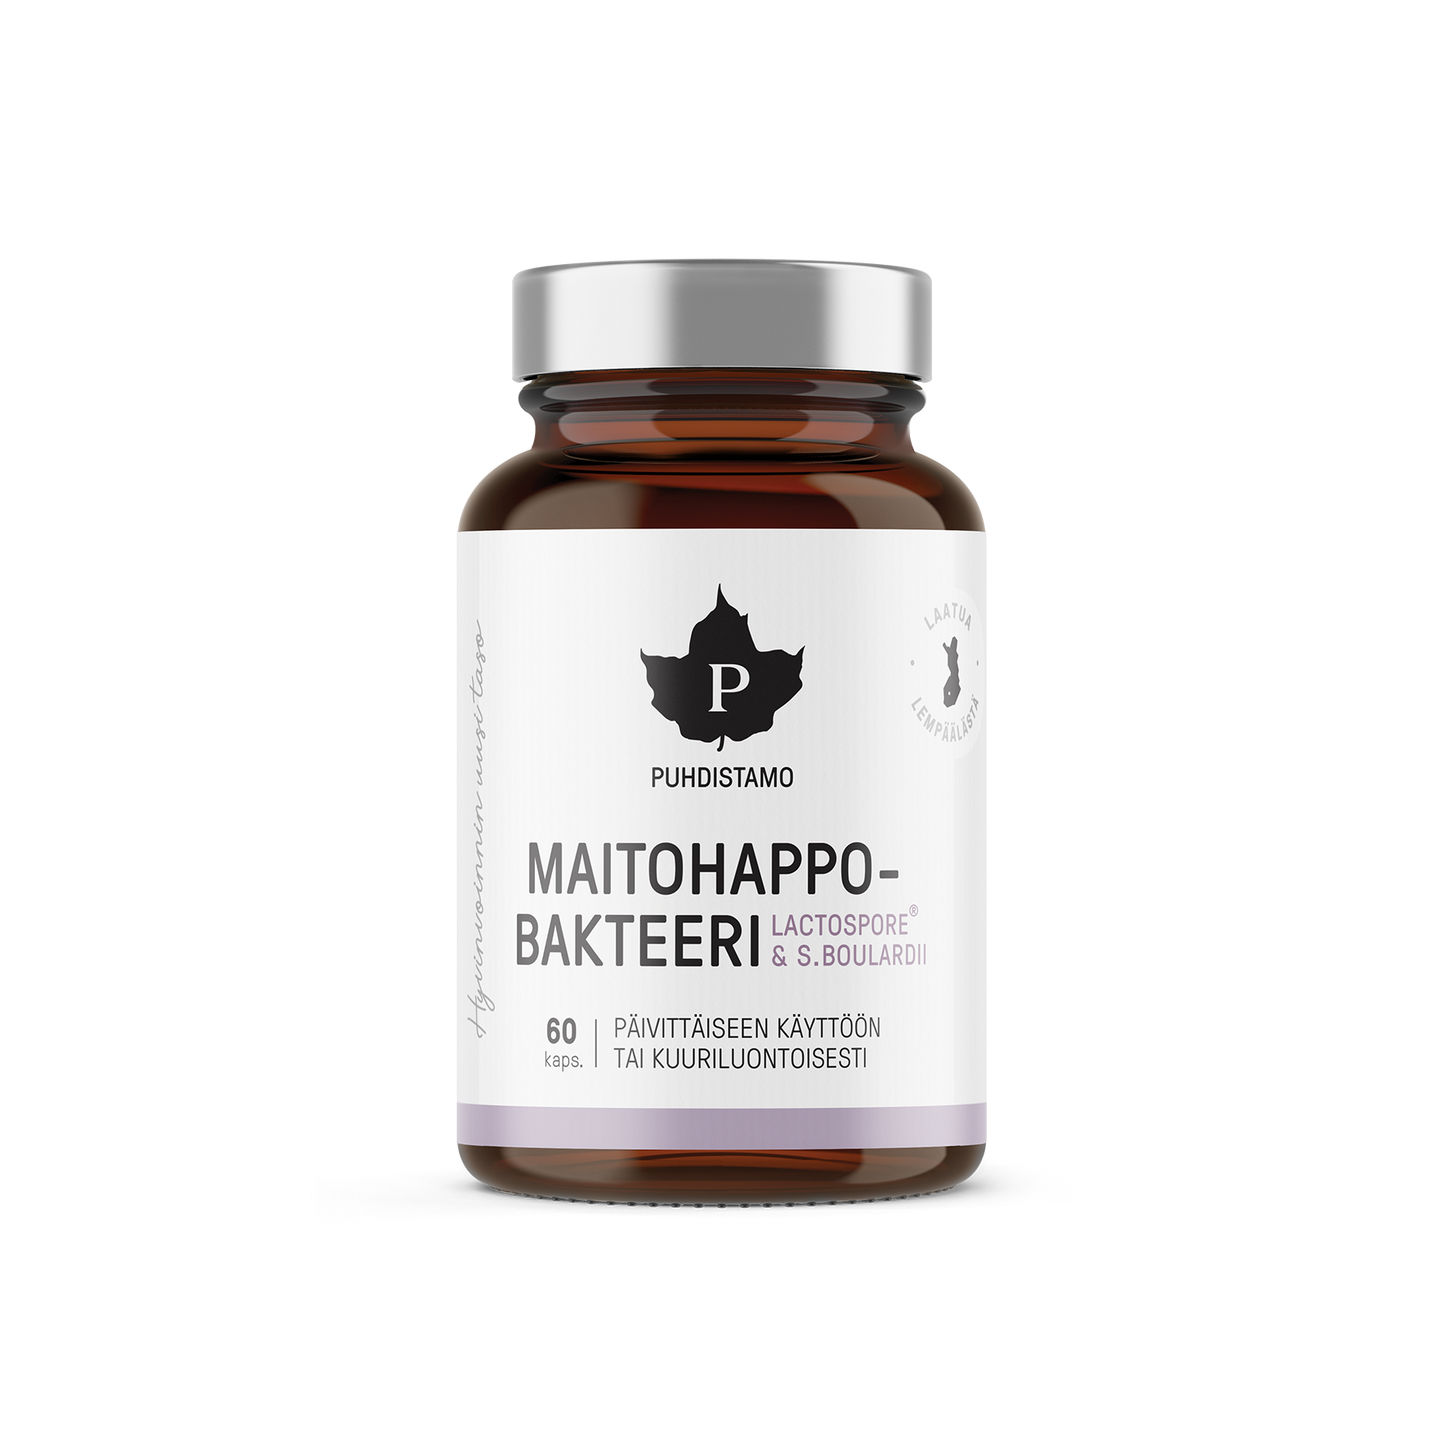 Maitohappobakteeri Lactospore & Boulardii